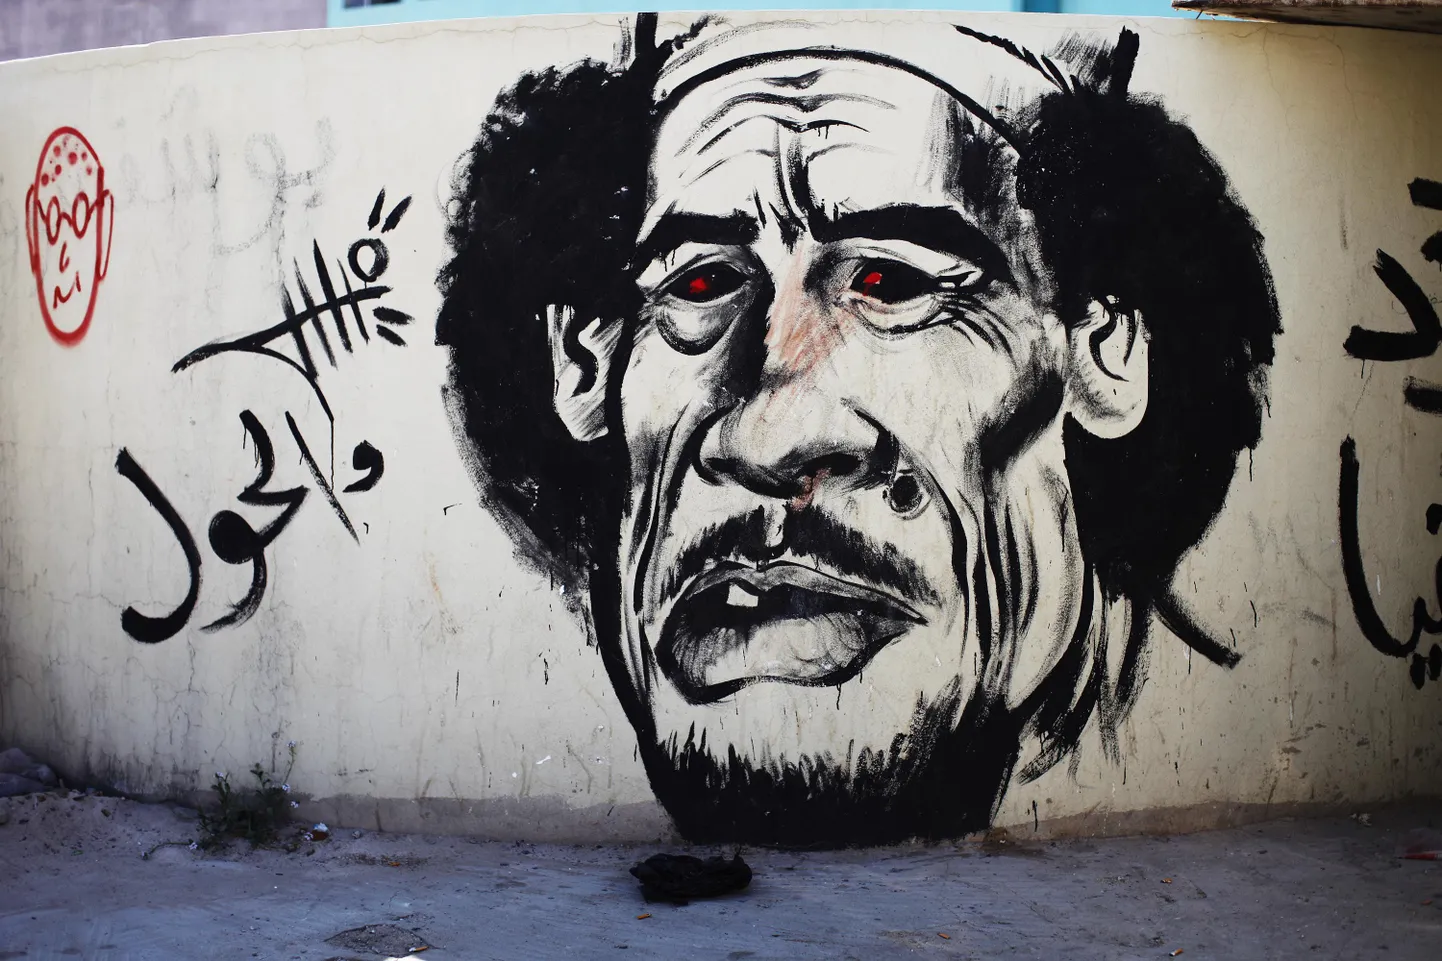 Граффити, созданное противниками Муаммара Каддафи в Бенгази.